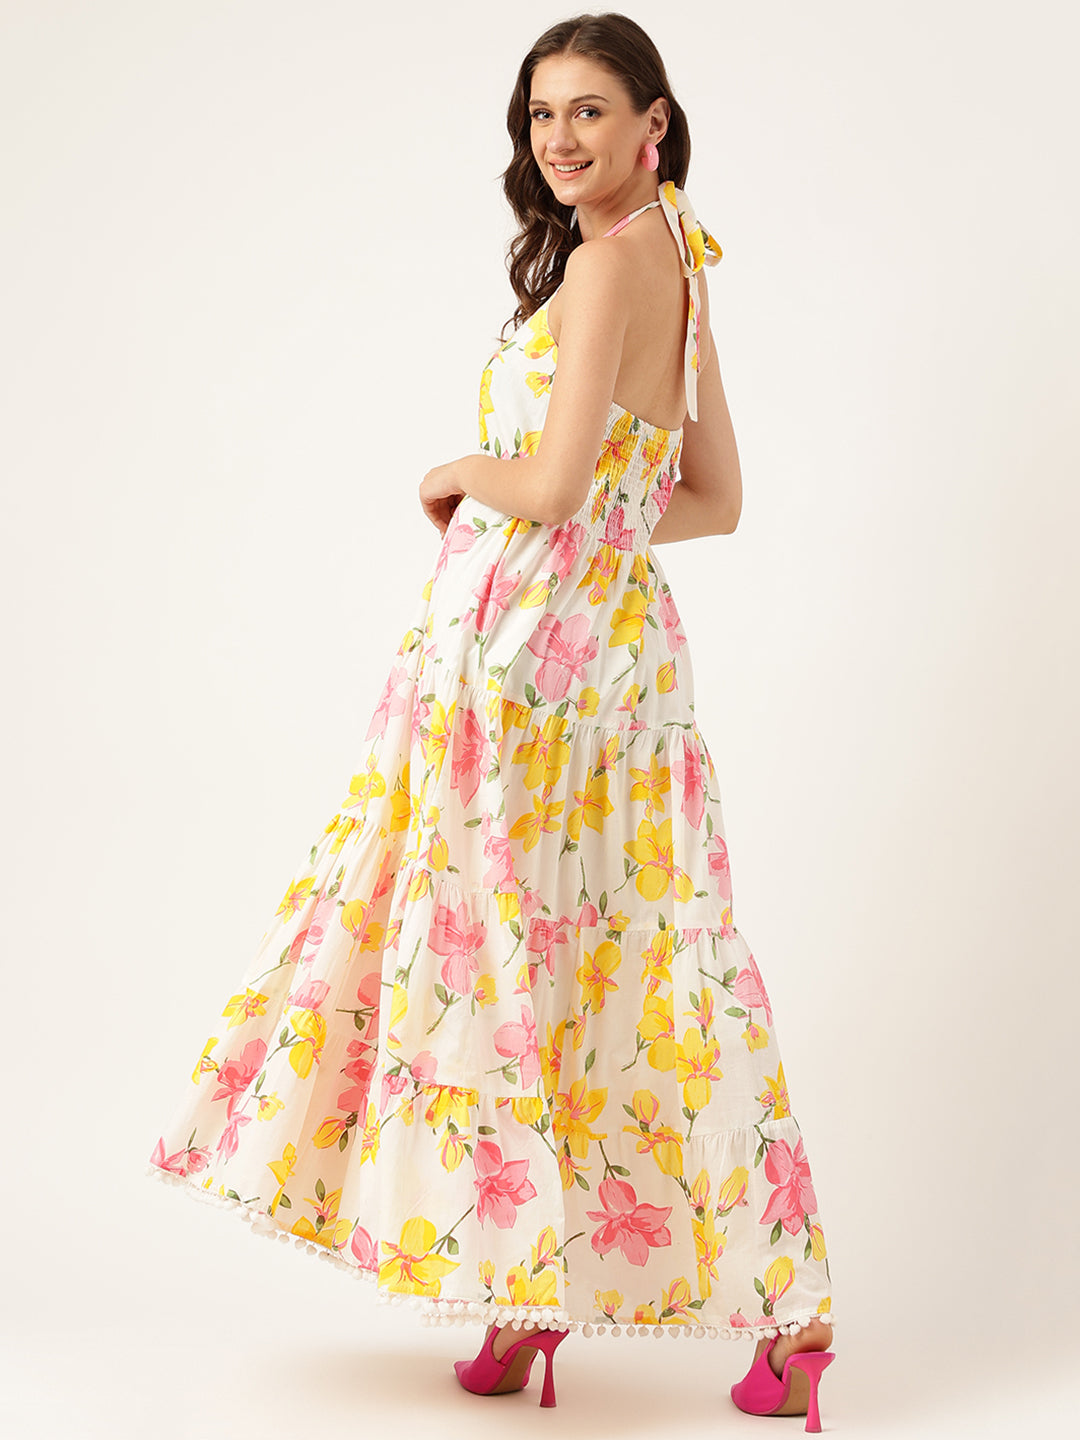 Floral Printed Halter Neck Cotton Casual Maxi Dress